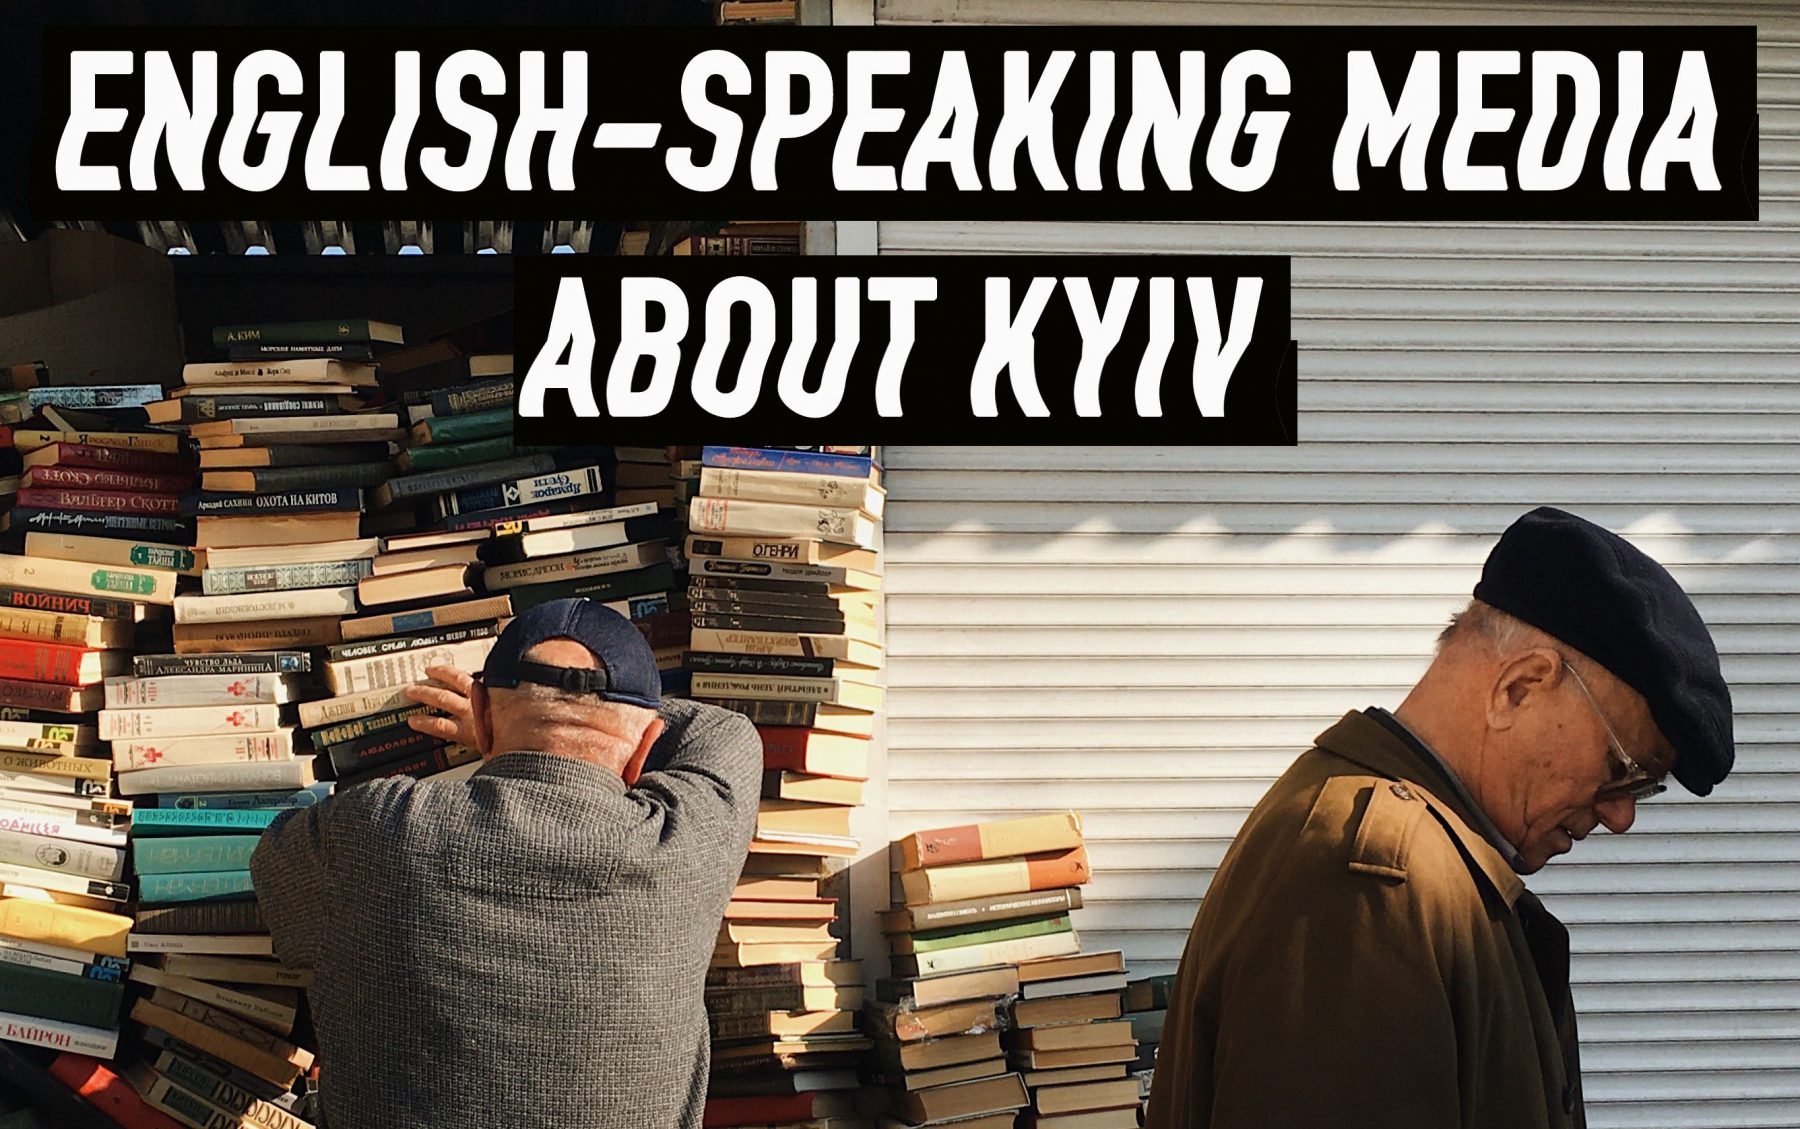 English-speaking media about Kyiv and Ukraine